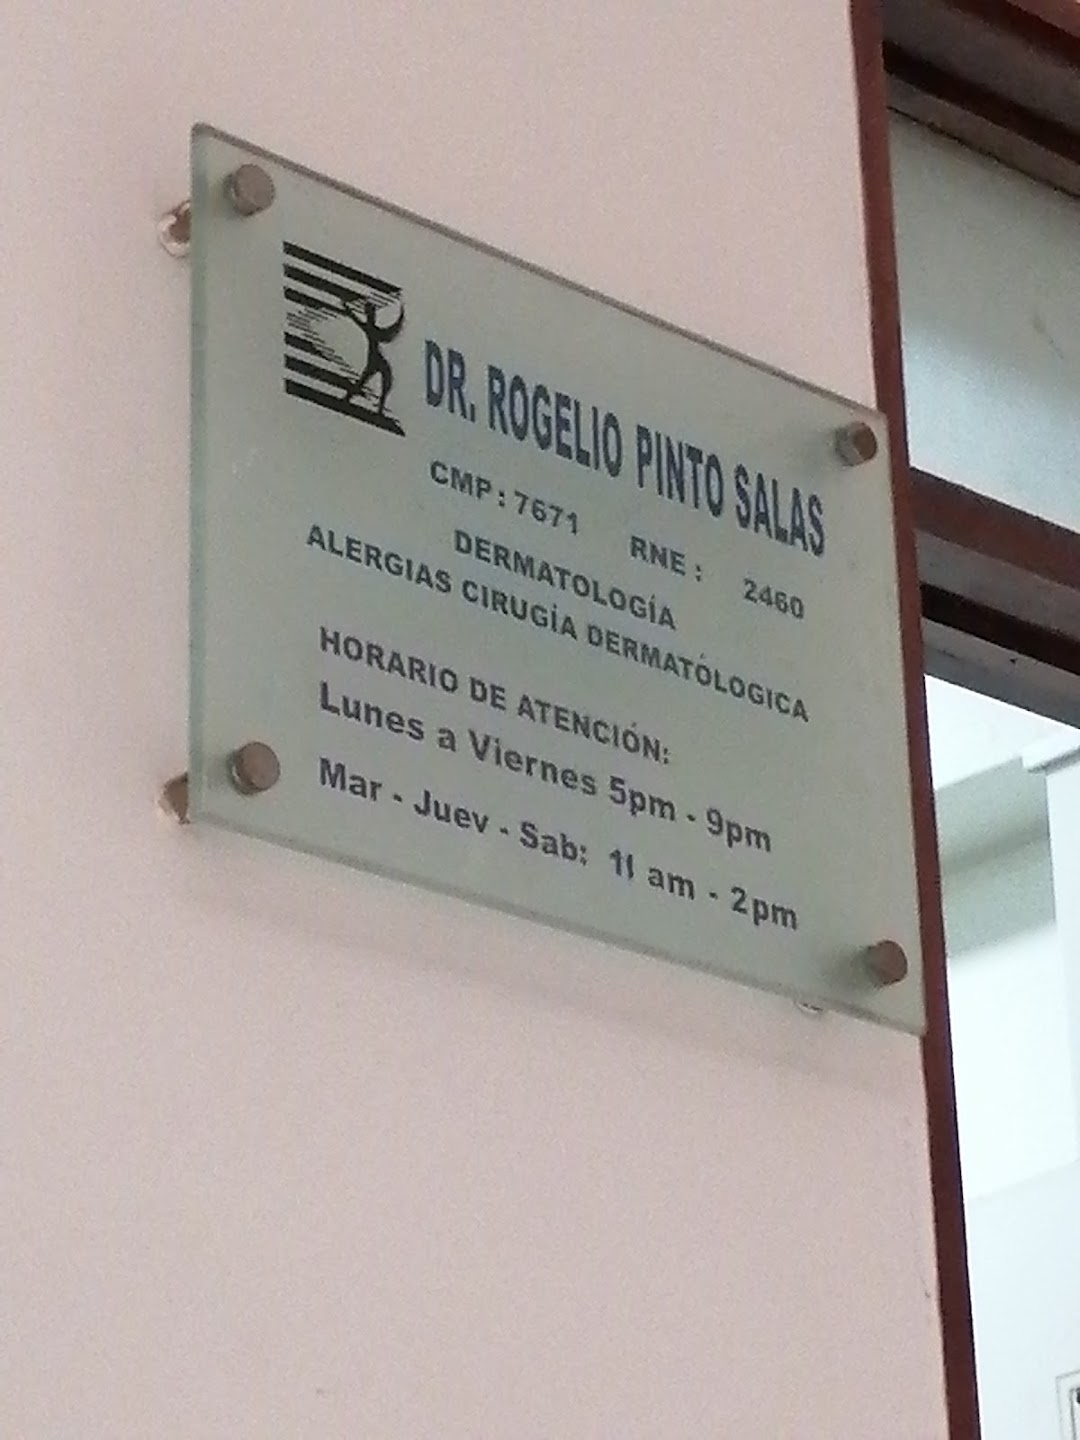 Doctor Rogelio Pinto Salas